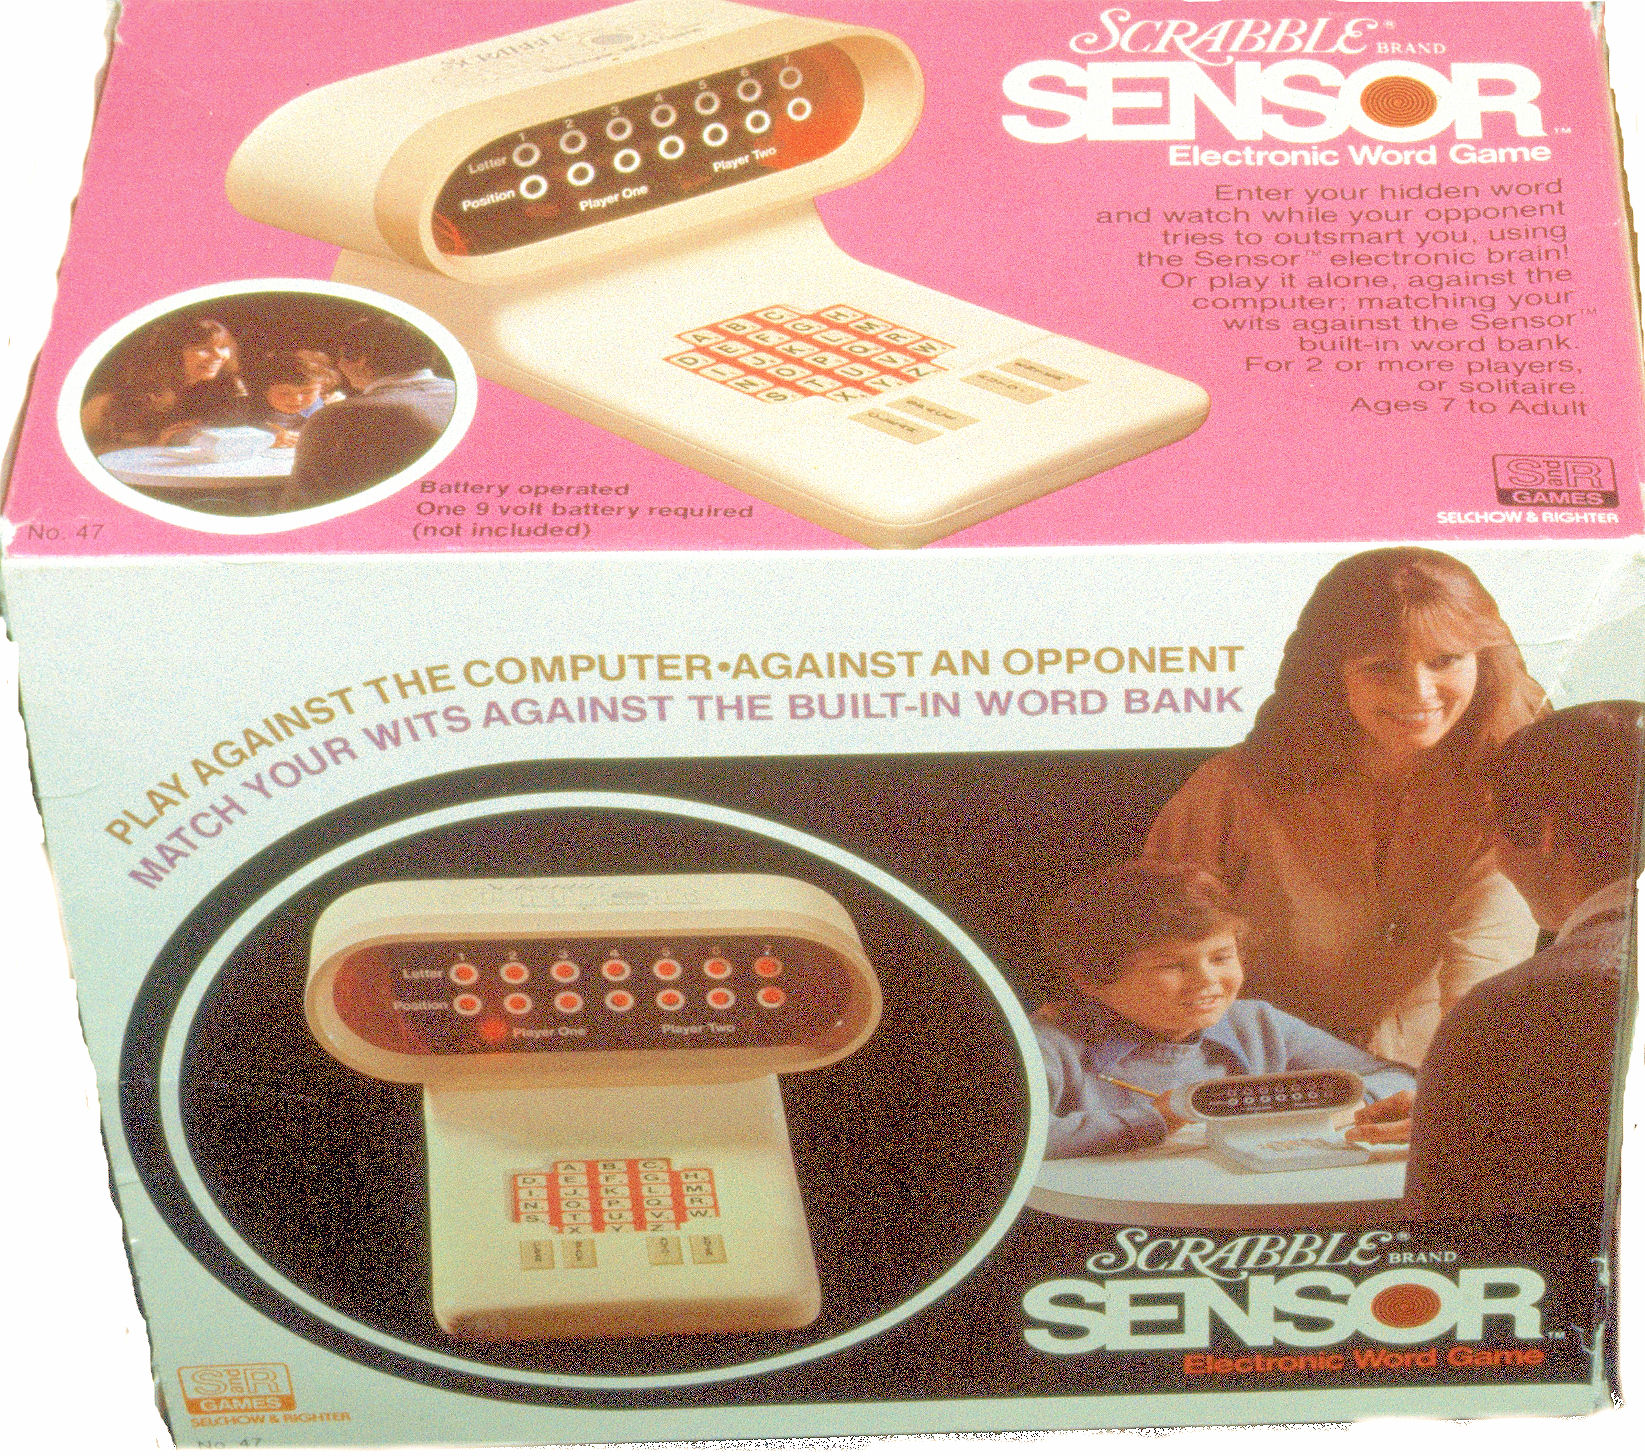 Sensor Box